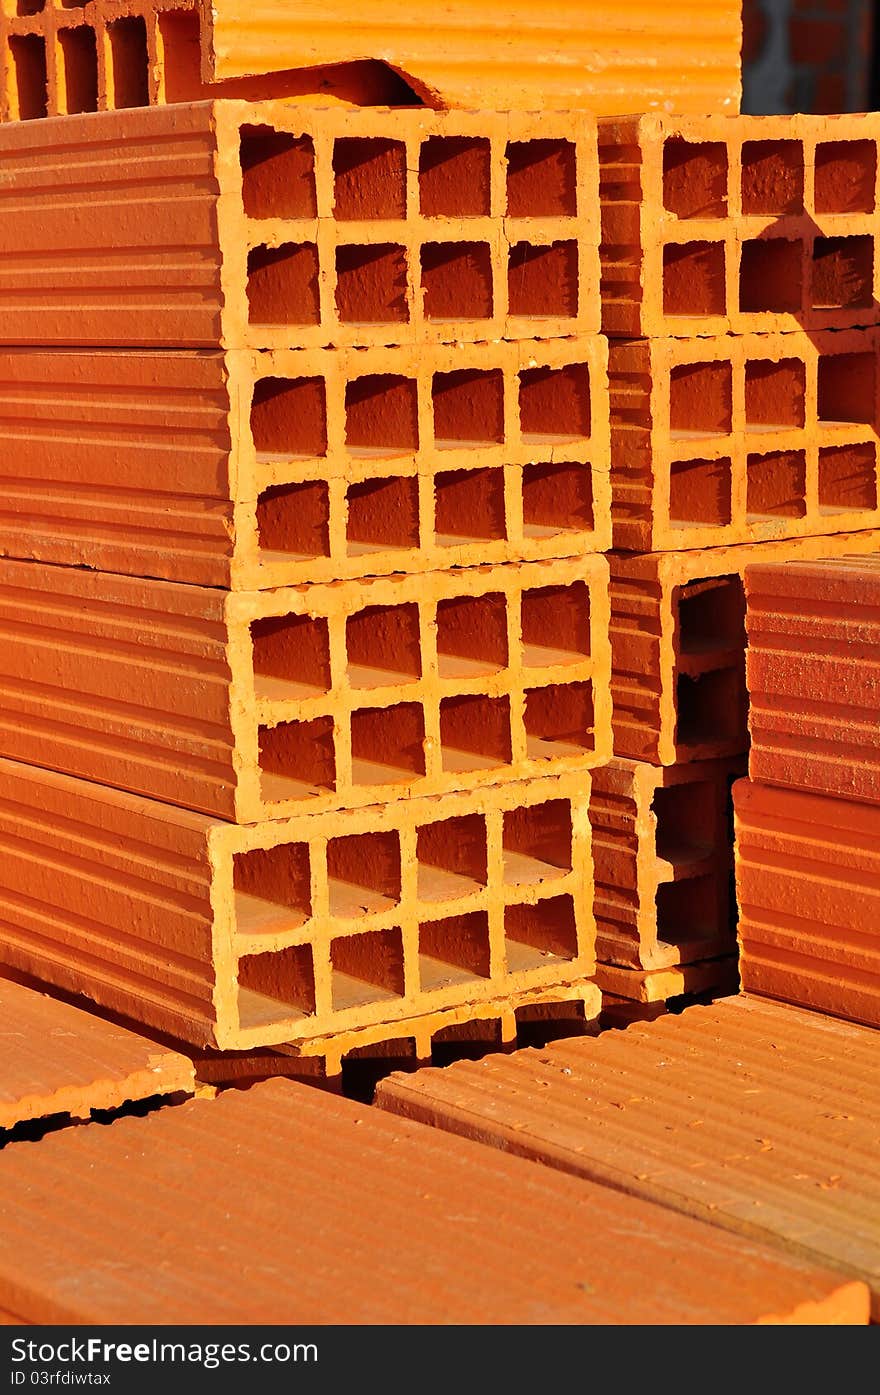 Pile of orange bricks used to build walls. Pile of orange bricks used to build walls